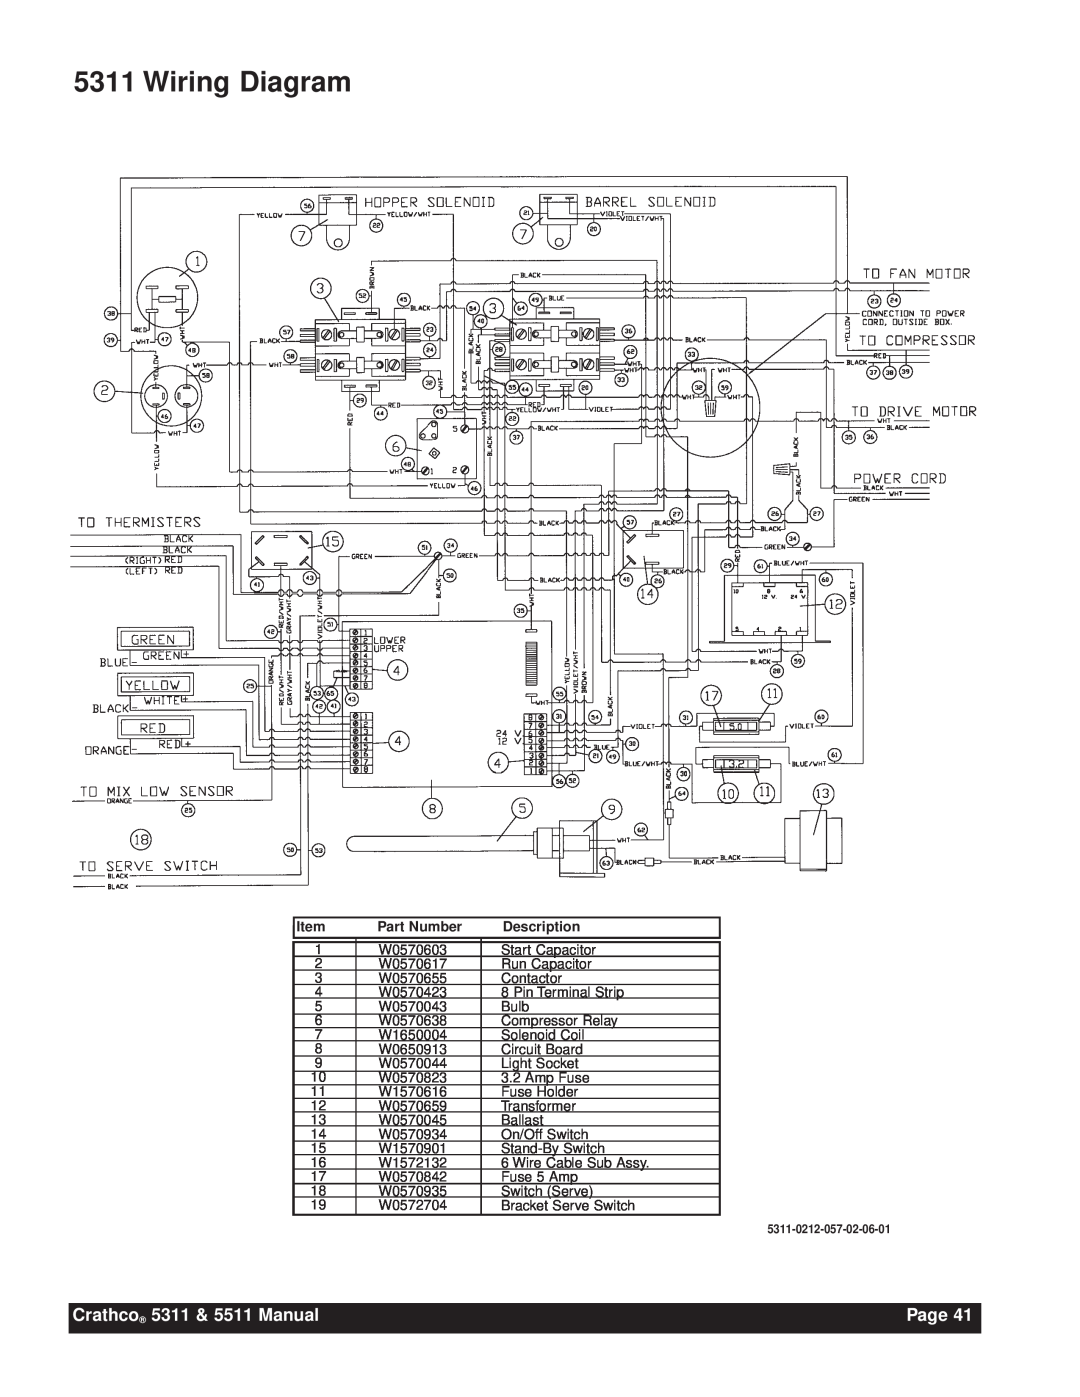 Grindmaster instruction manual Wiring Diagram, Crathco 5311 & 5511 Manual, Page, Item, Part Number, Description 